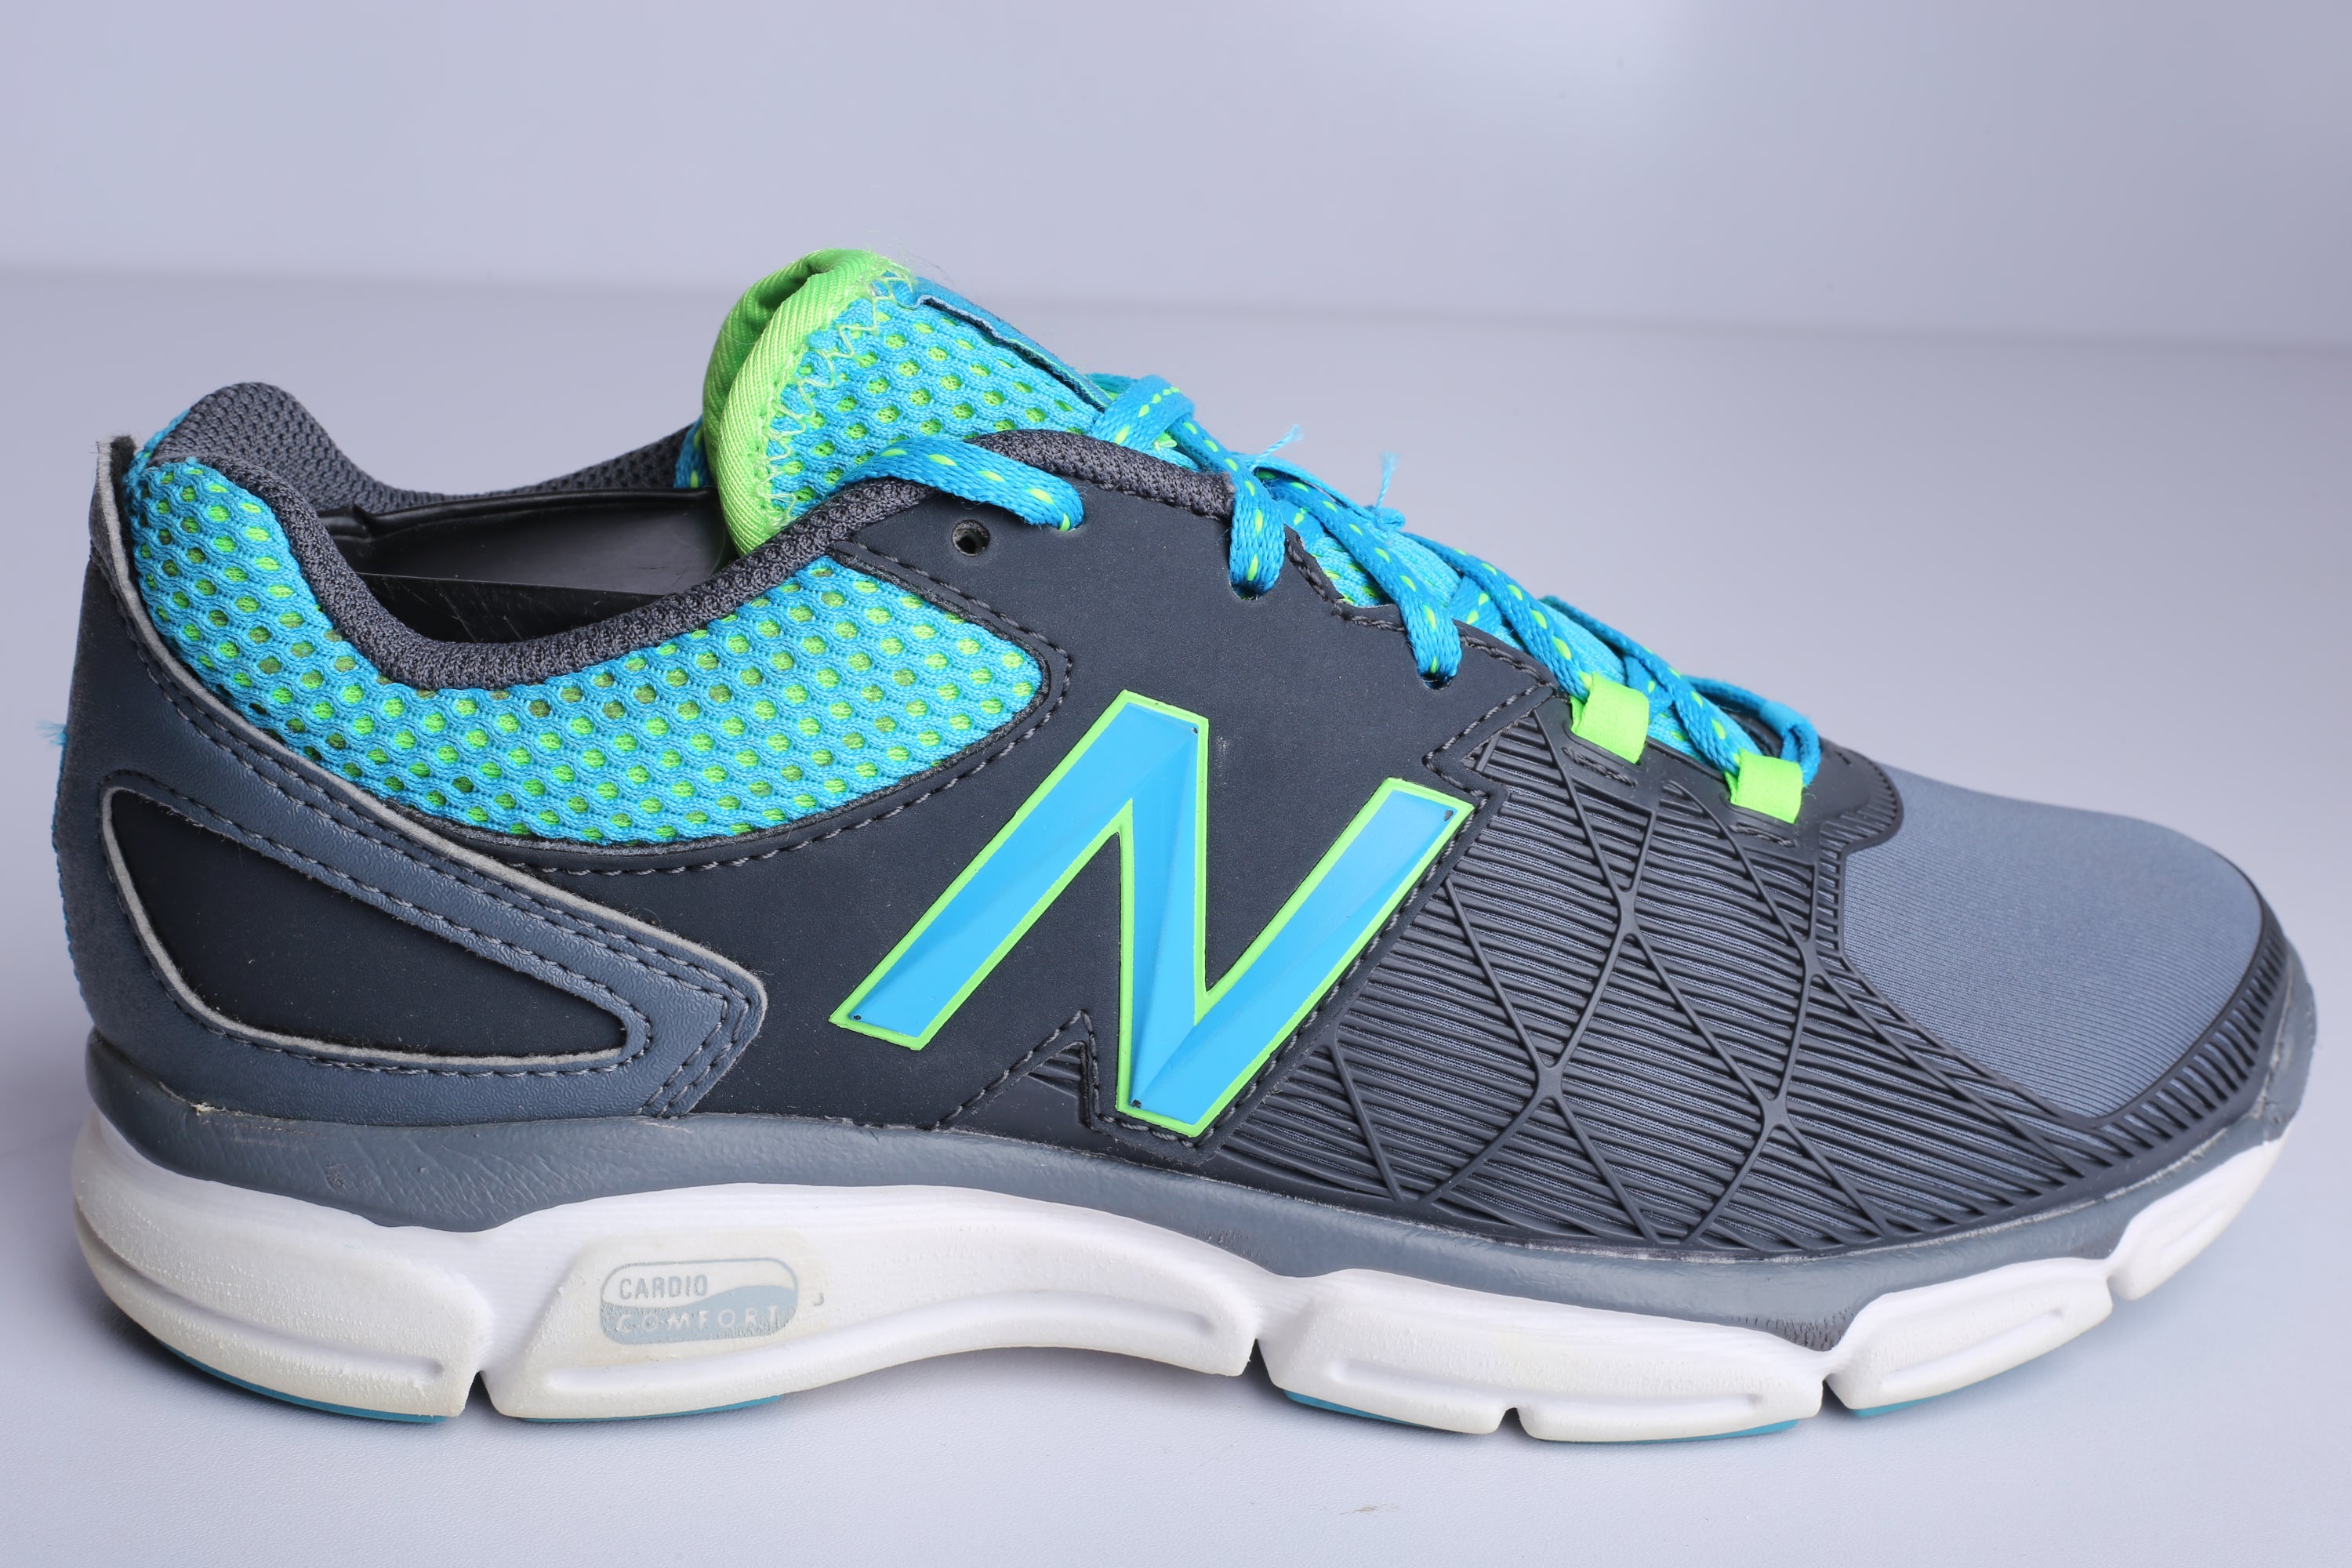 New Balance 813 Sneaker - (Conditon Premium)